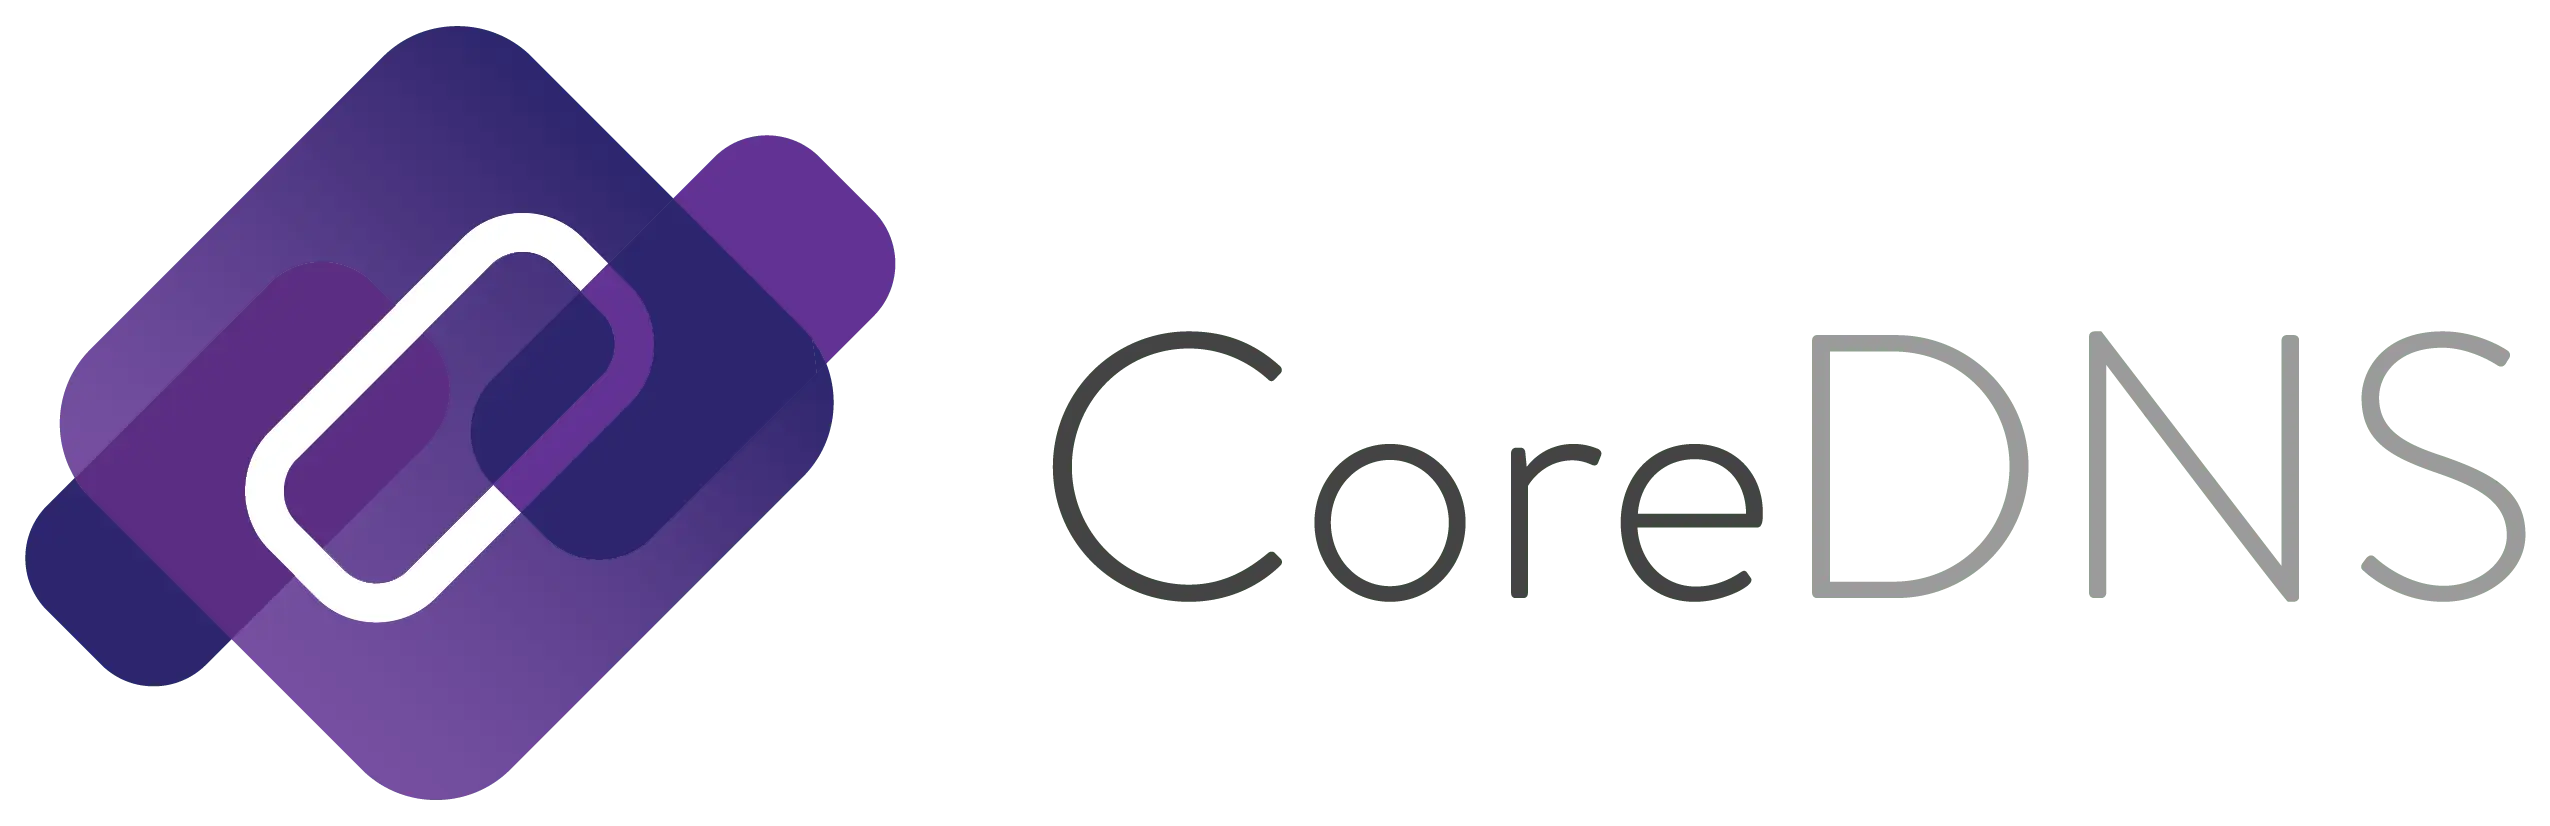 coredns-logo